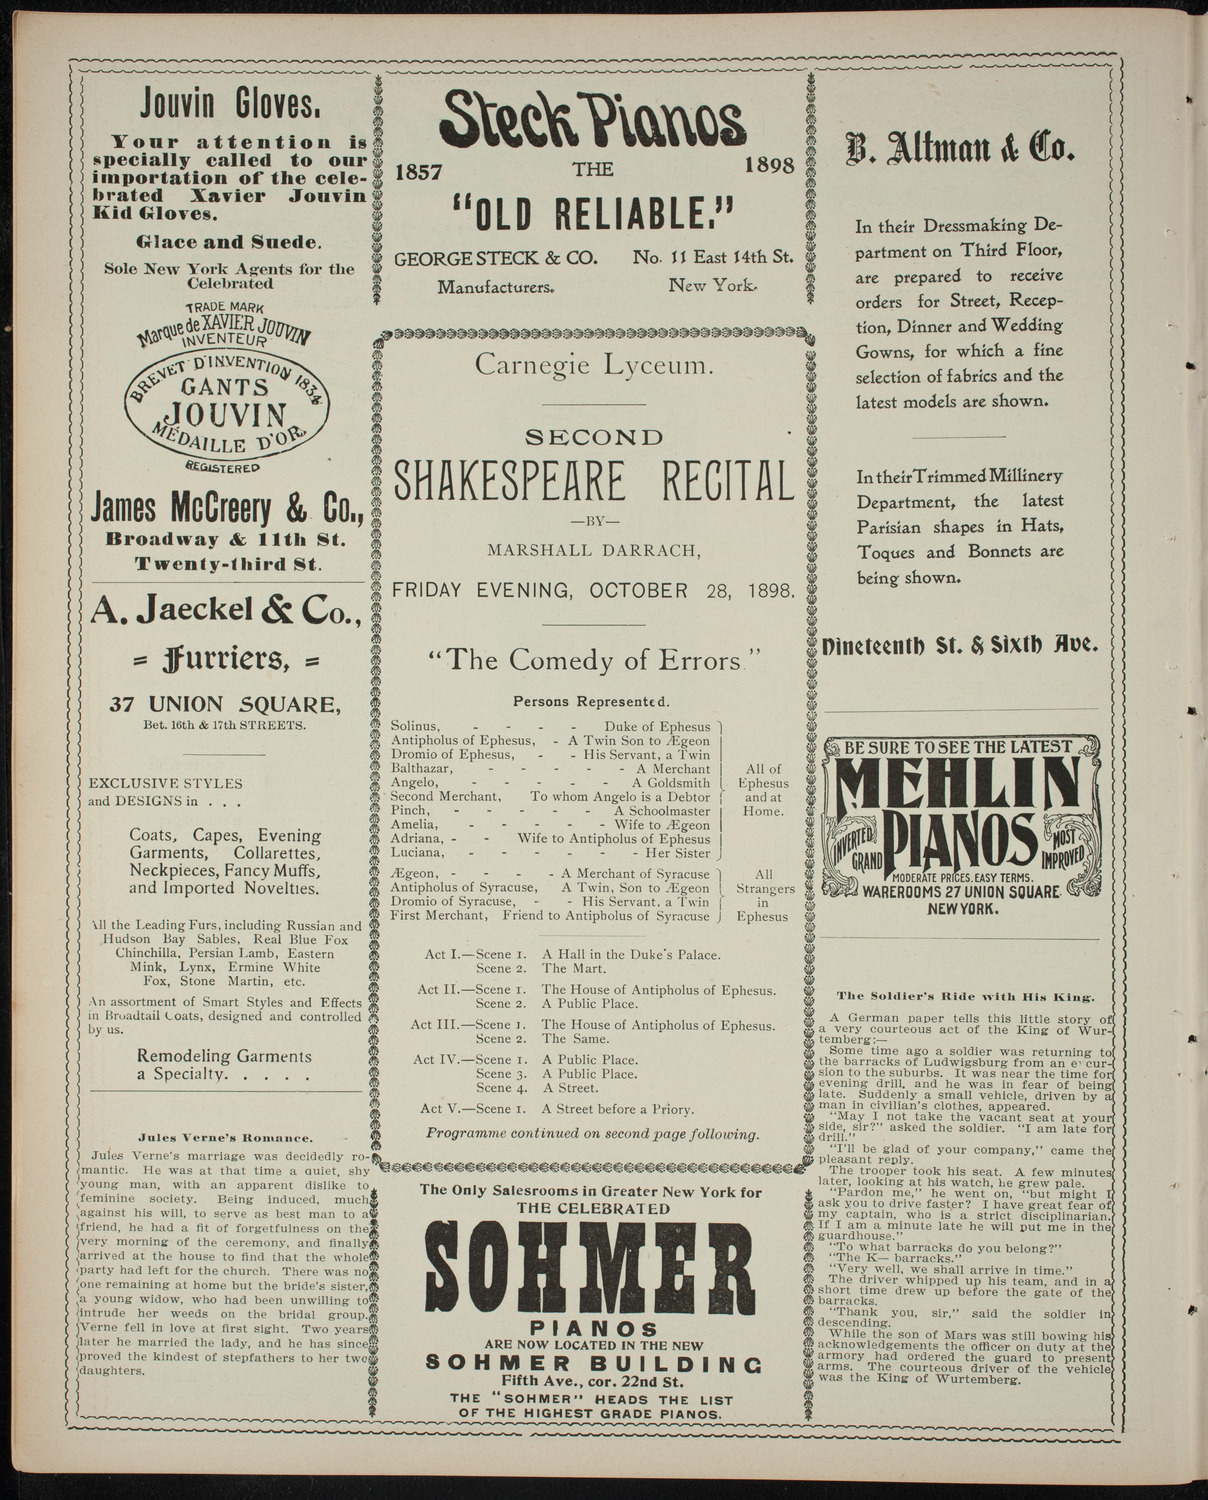 Shakespeare Recital by Marshall Darrach, October 28, 1898, program page 4